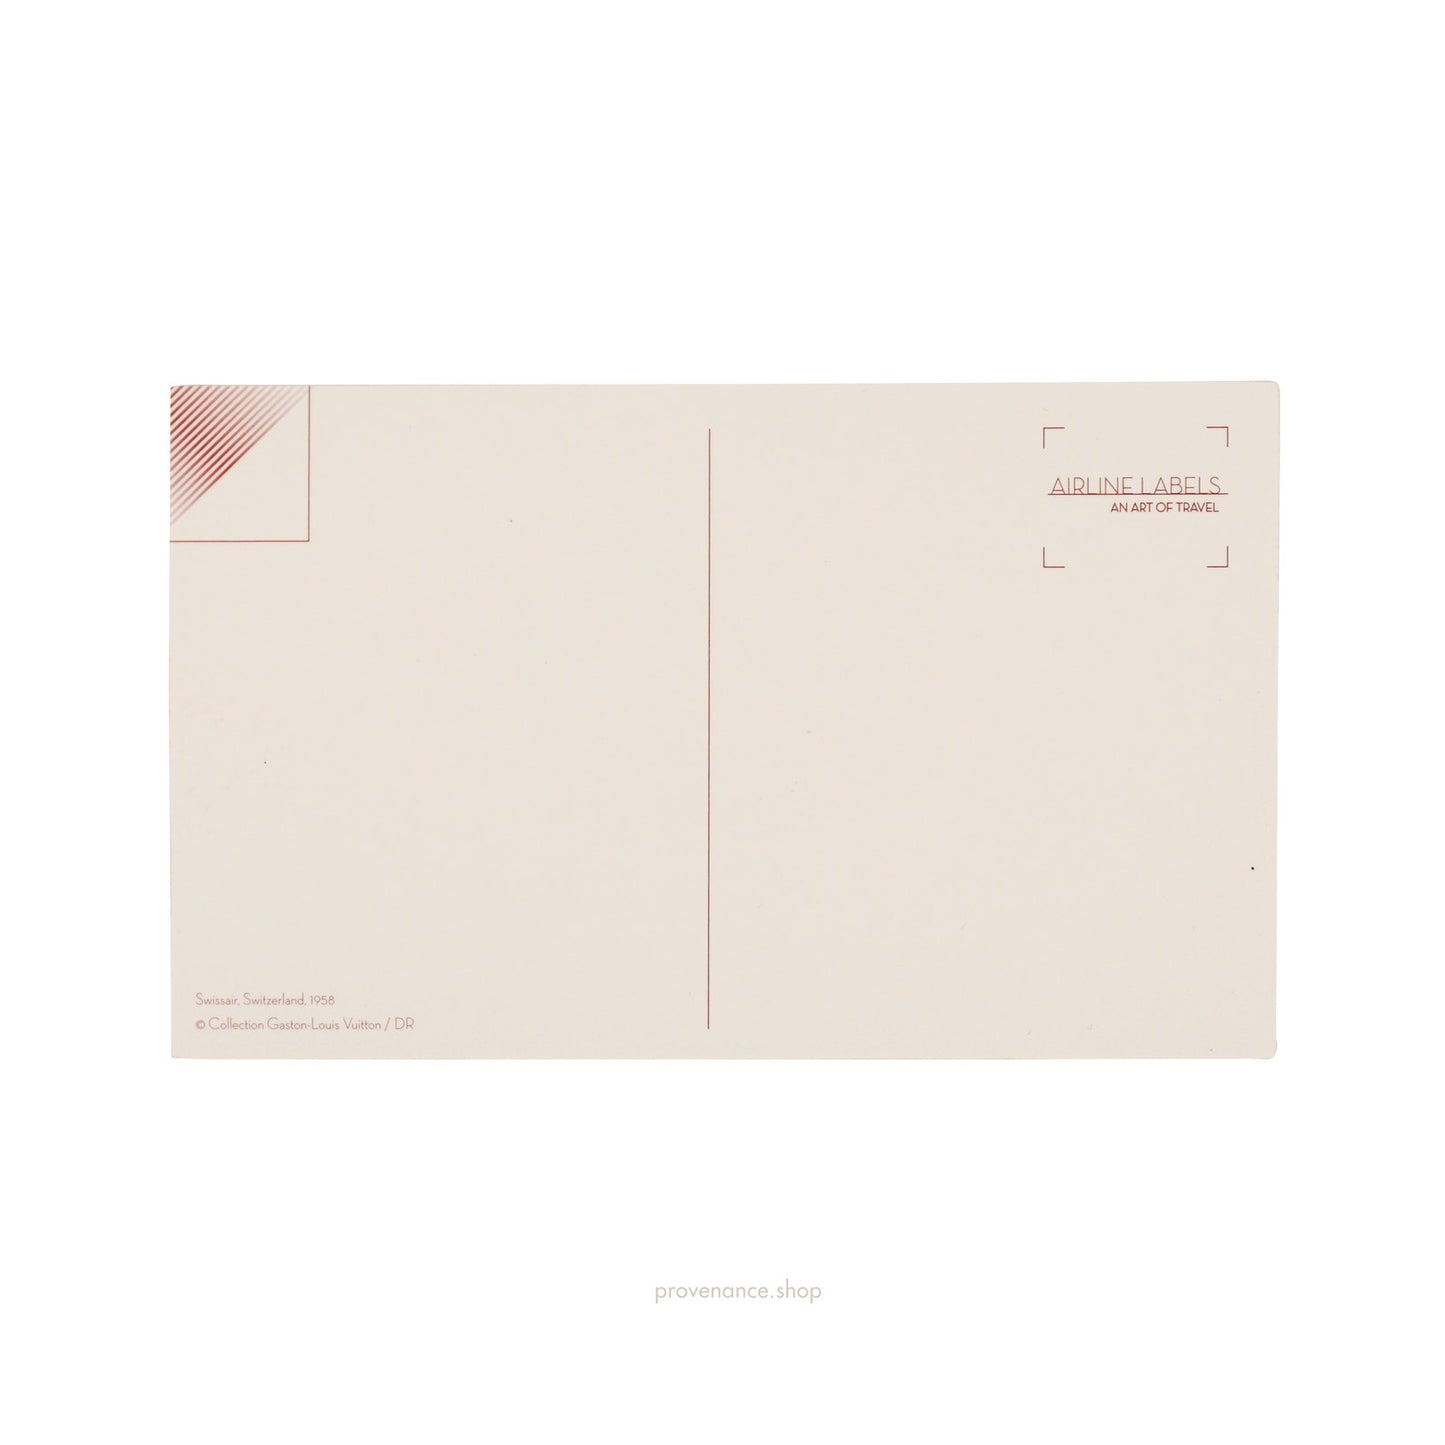 🔴 Louis Vuitton Airline Label Postcard Sticker- SWISSAIR MIDDLE EAST